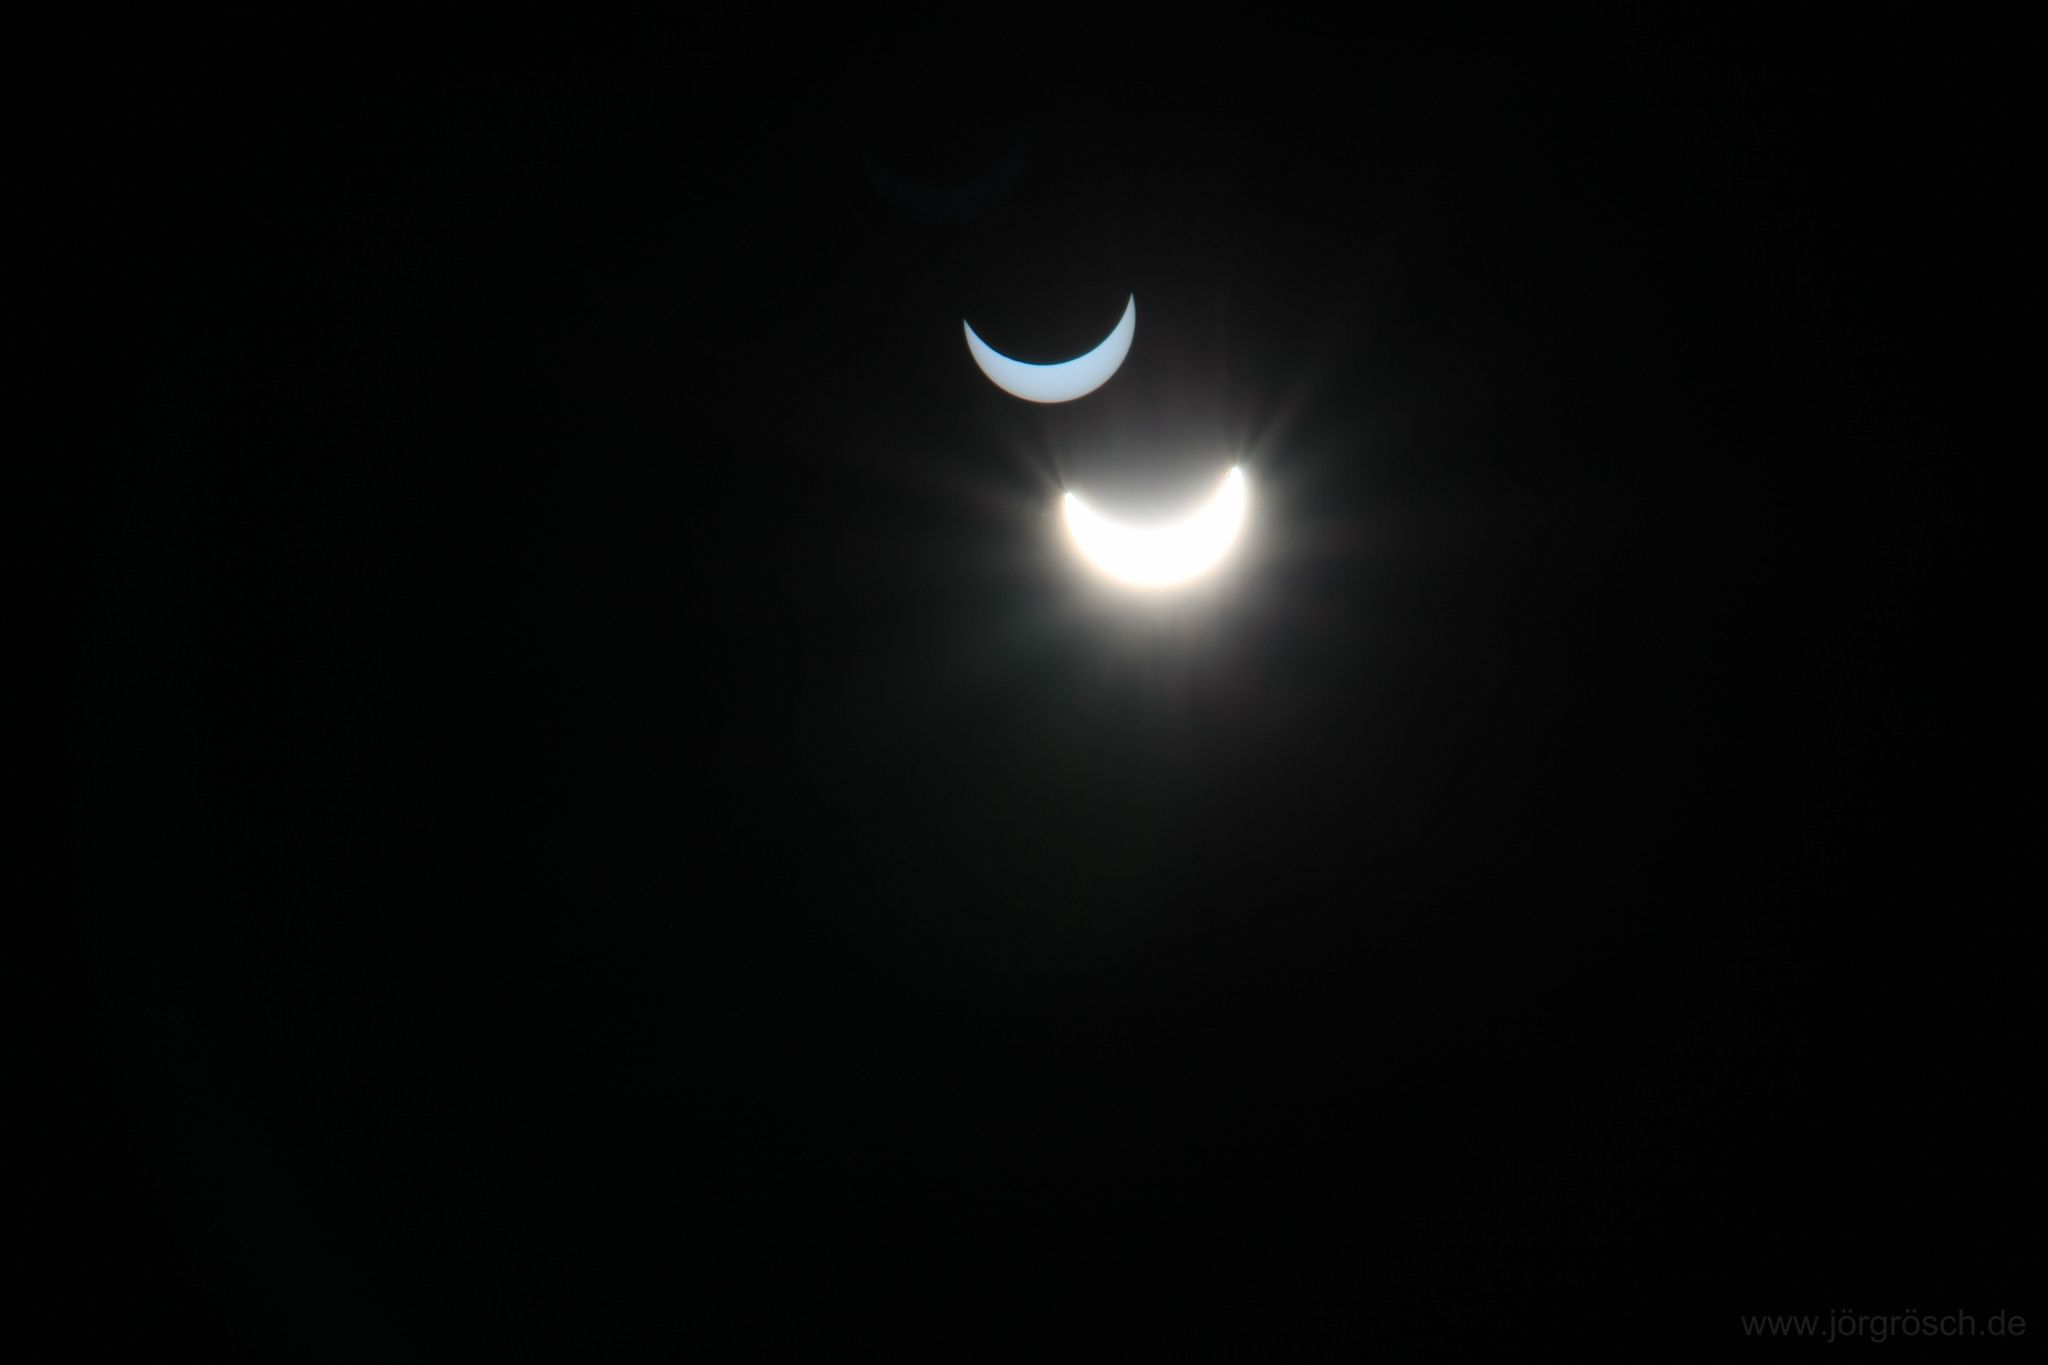 20150320-sonnenfinsterniss.JPG - Doppelbild der Sonnenfinsternis